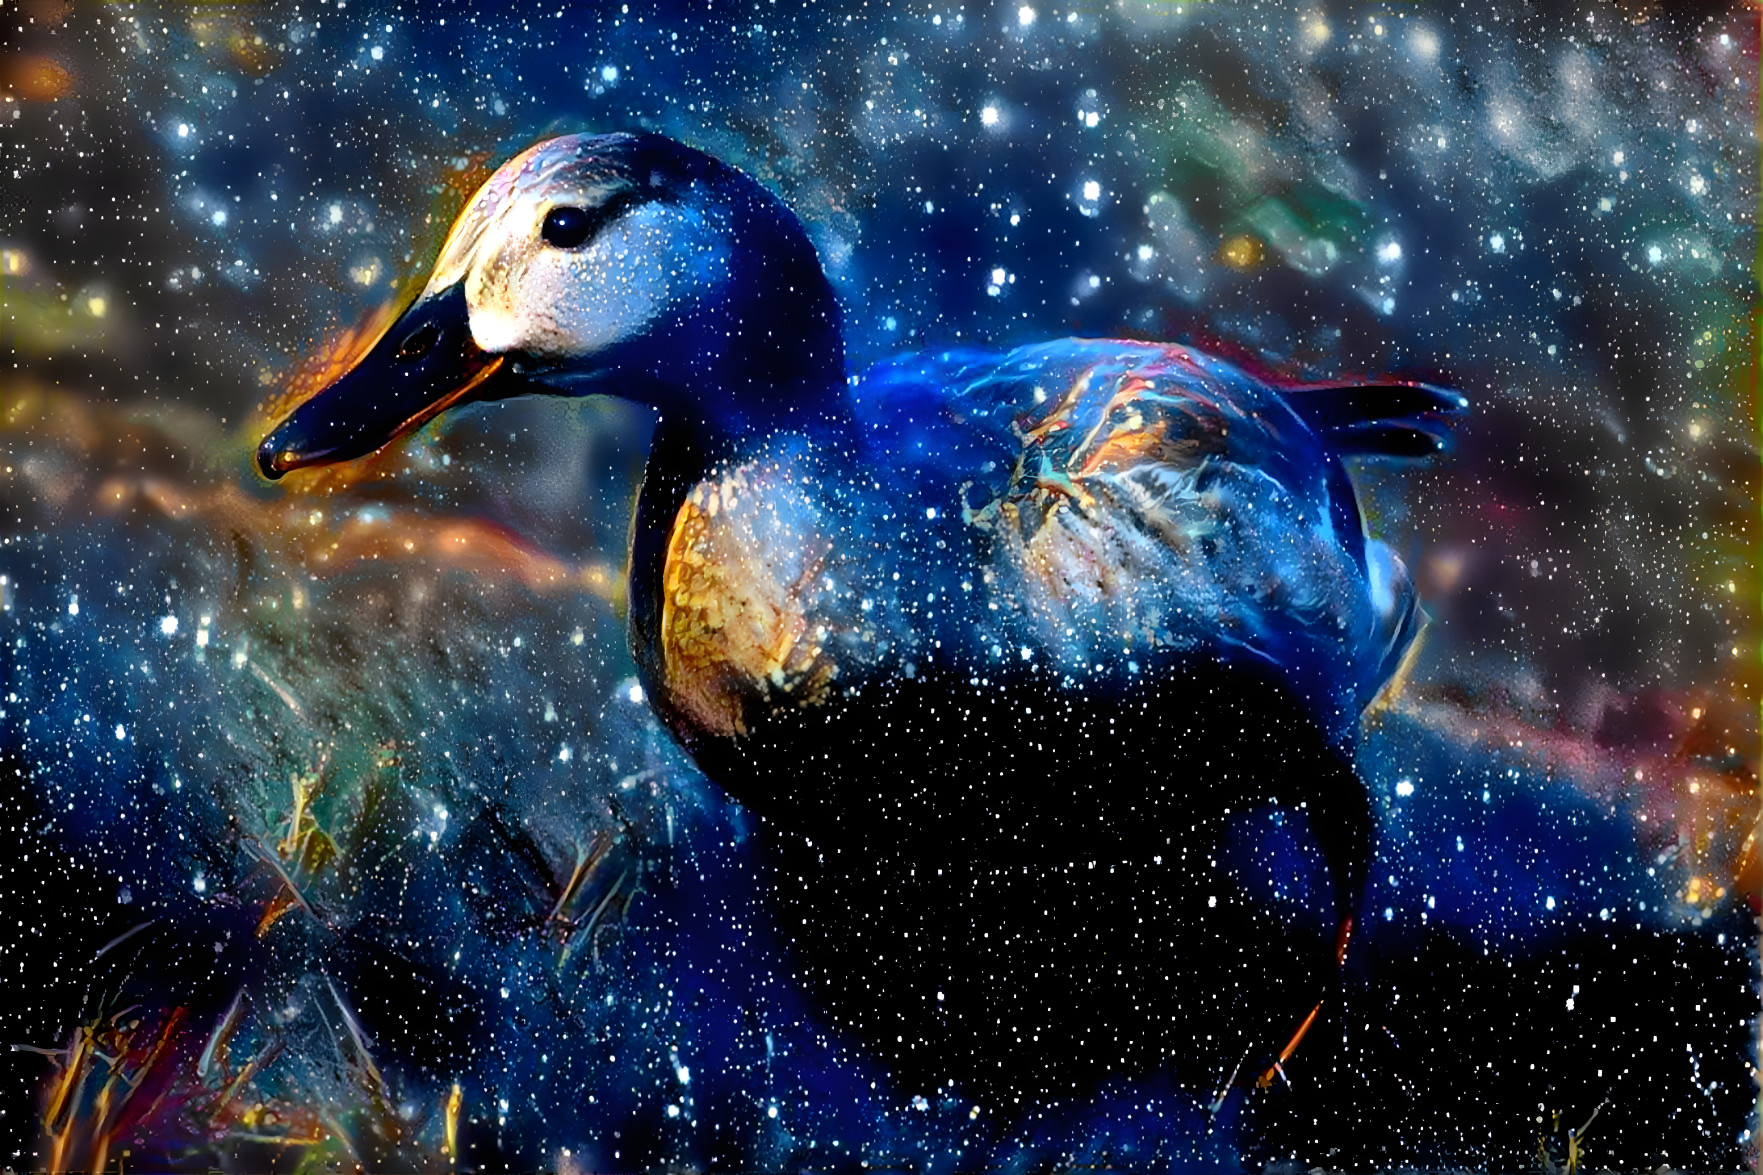 Star duck